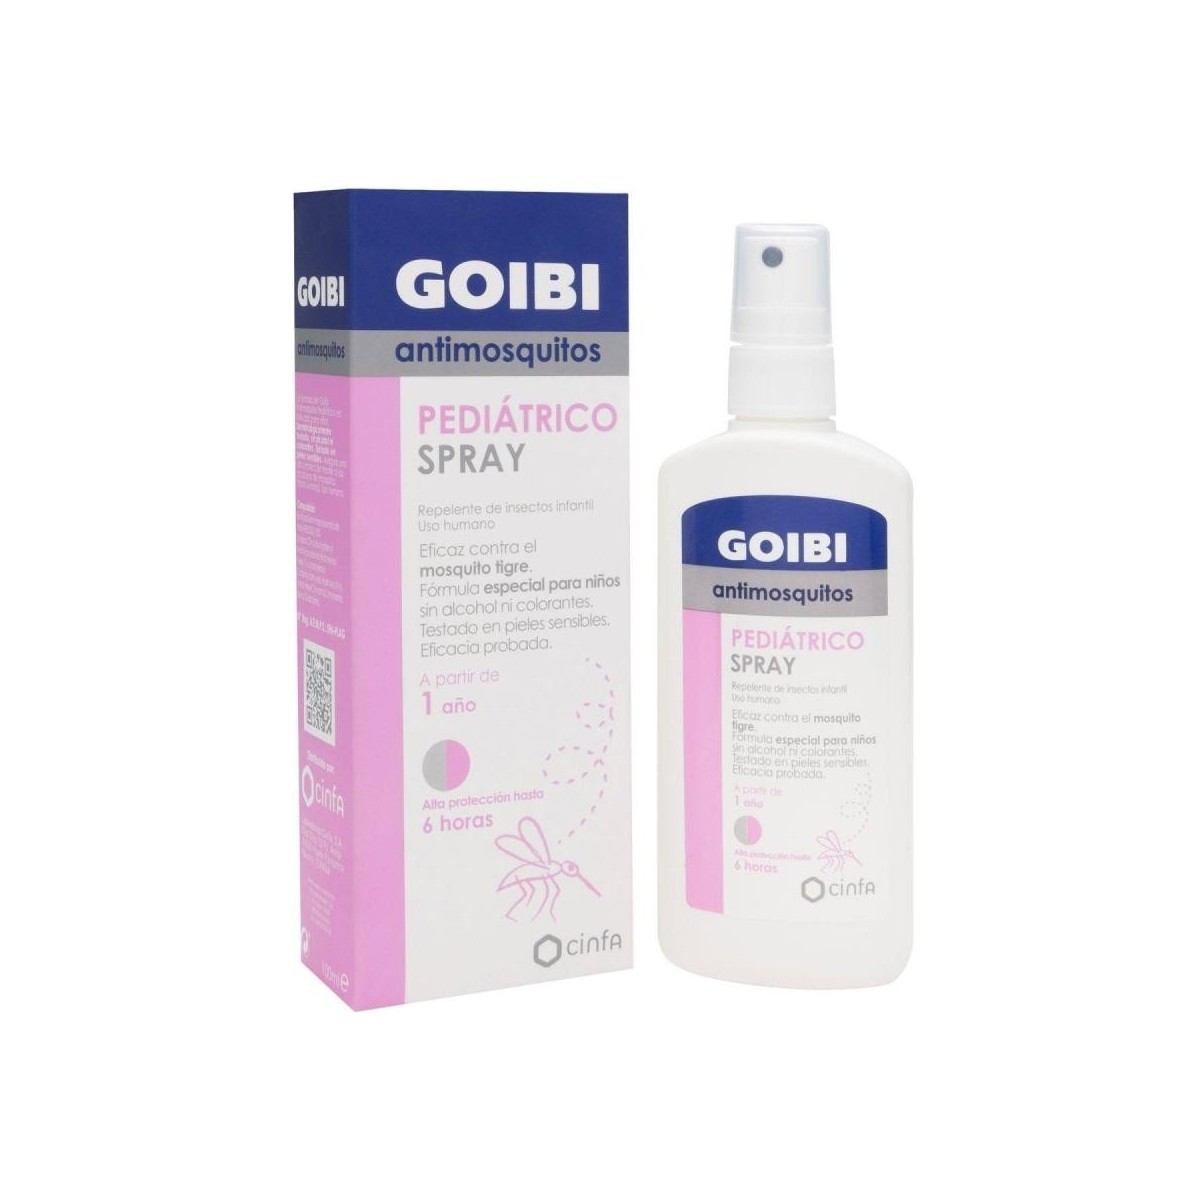 goibi-antimosquitos-pediatrico-spray-100-ml